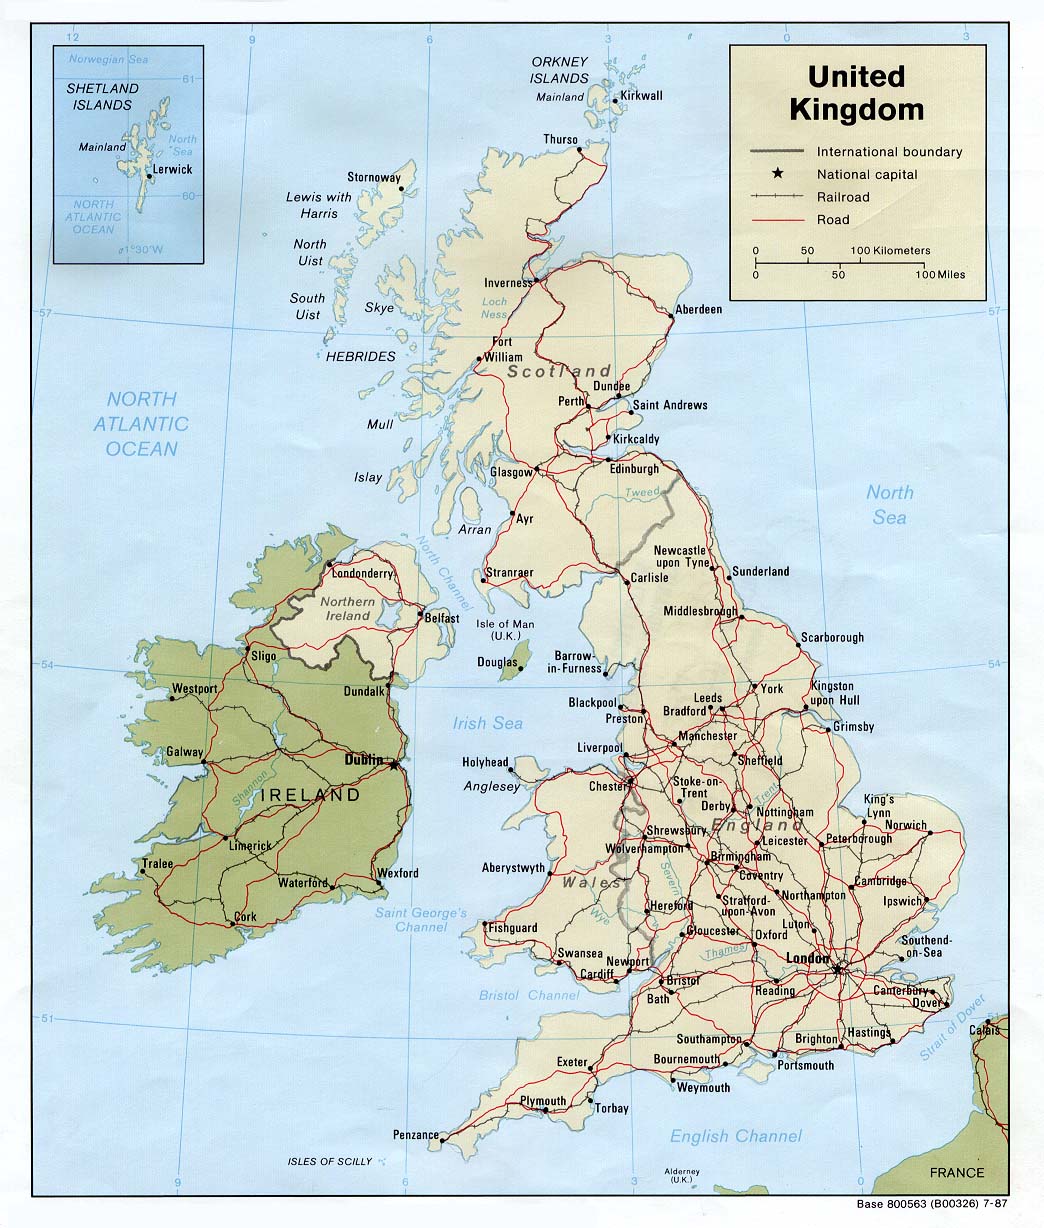 Mapa Político del Reino Unido 1987 - Tamaño completo | Gifex